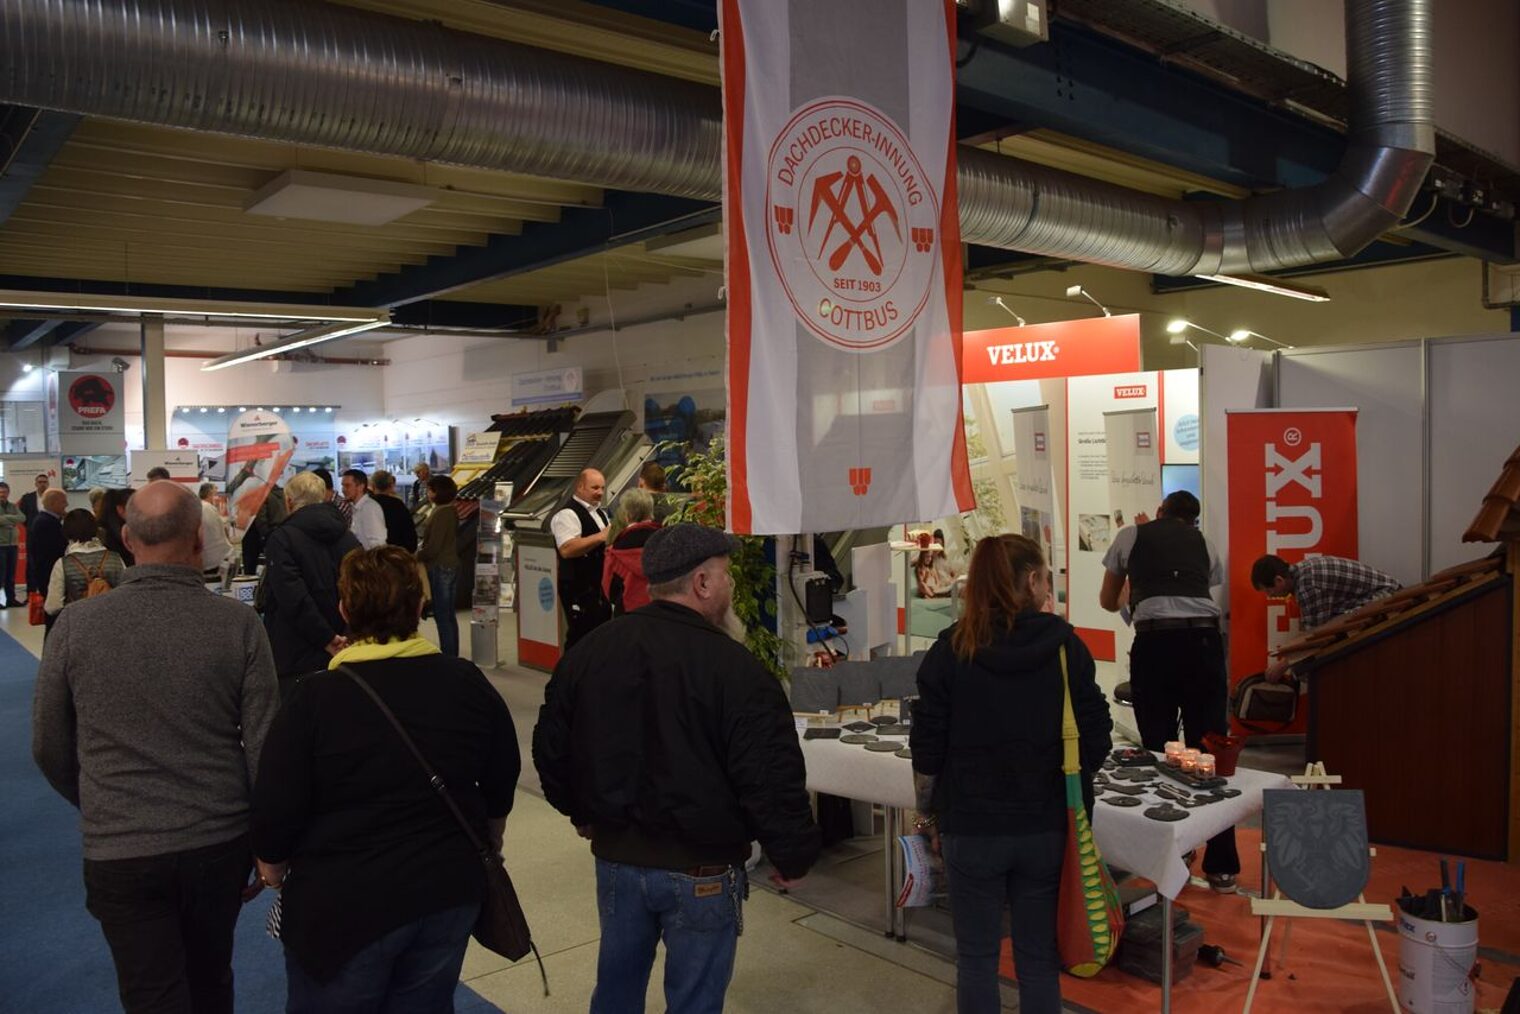 Handwerkermesse 2019 in Cottbus